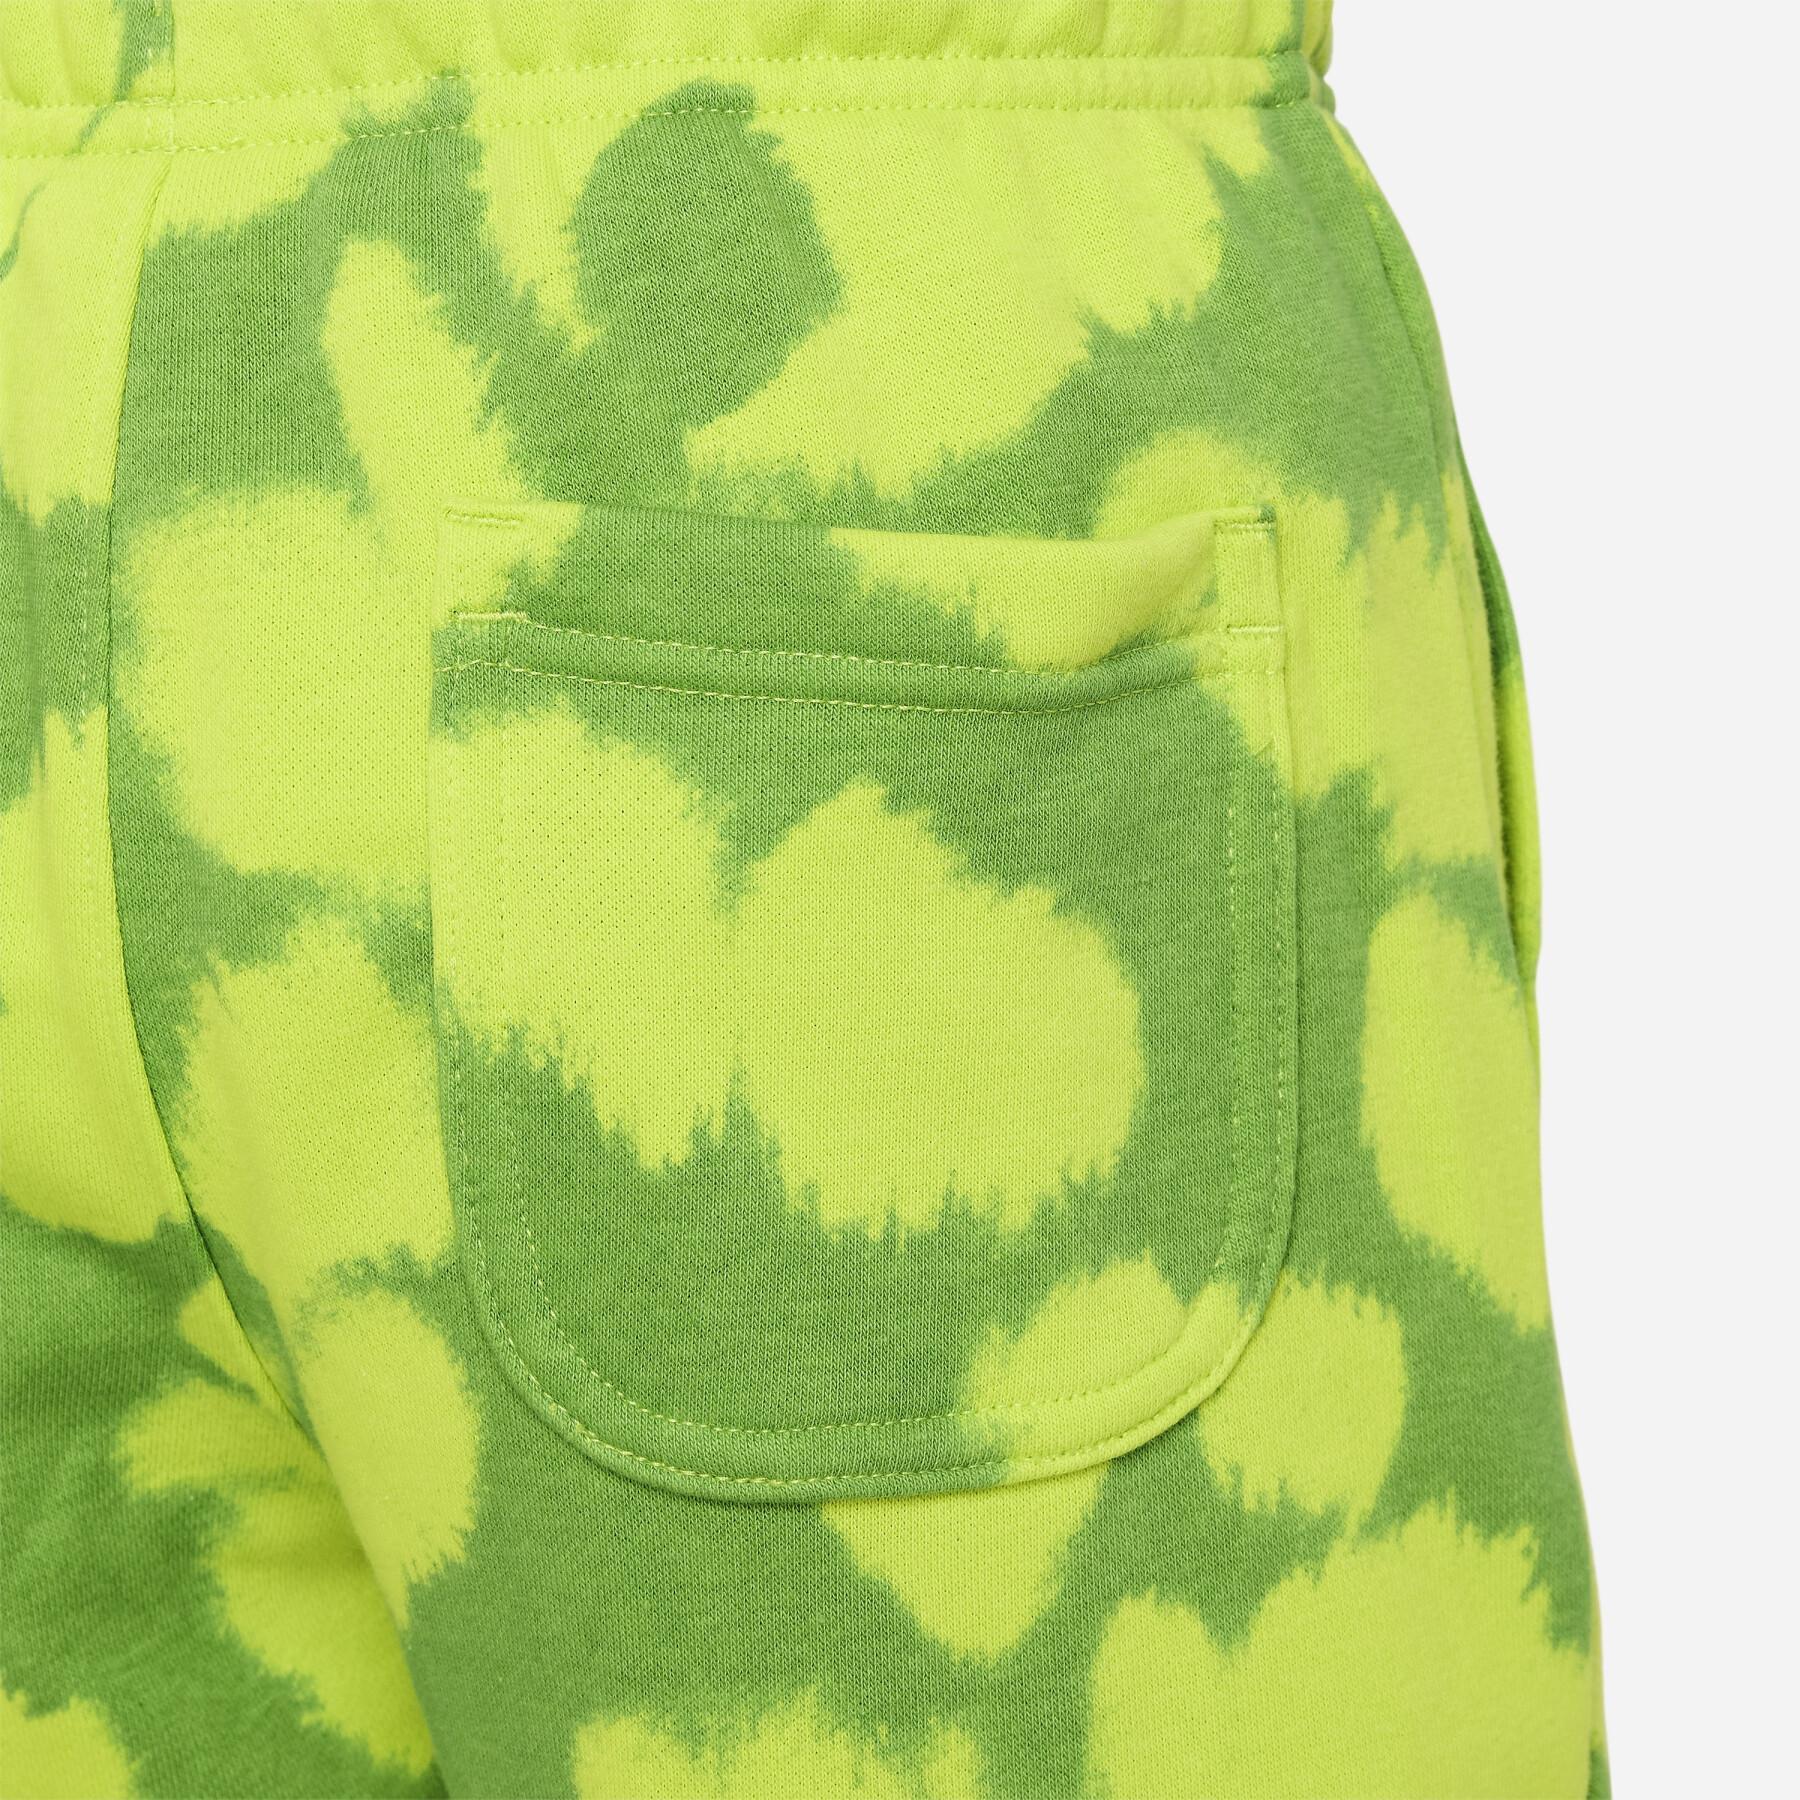 Pantalones cortos para niños Nike Connect